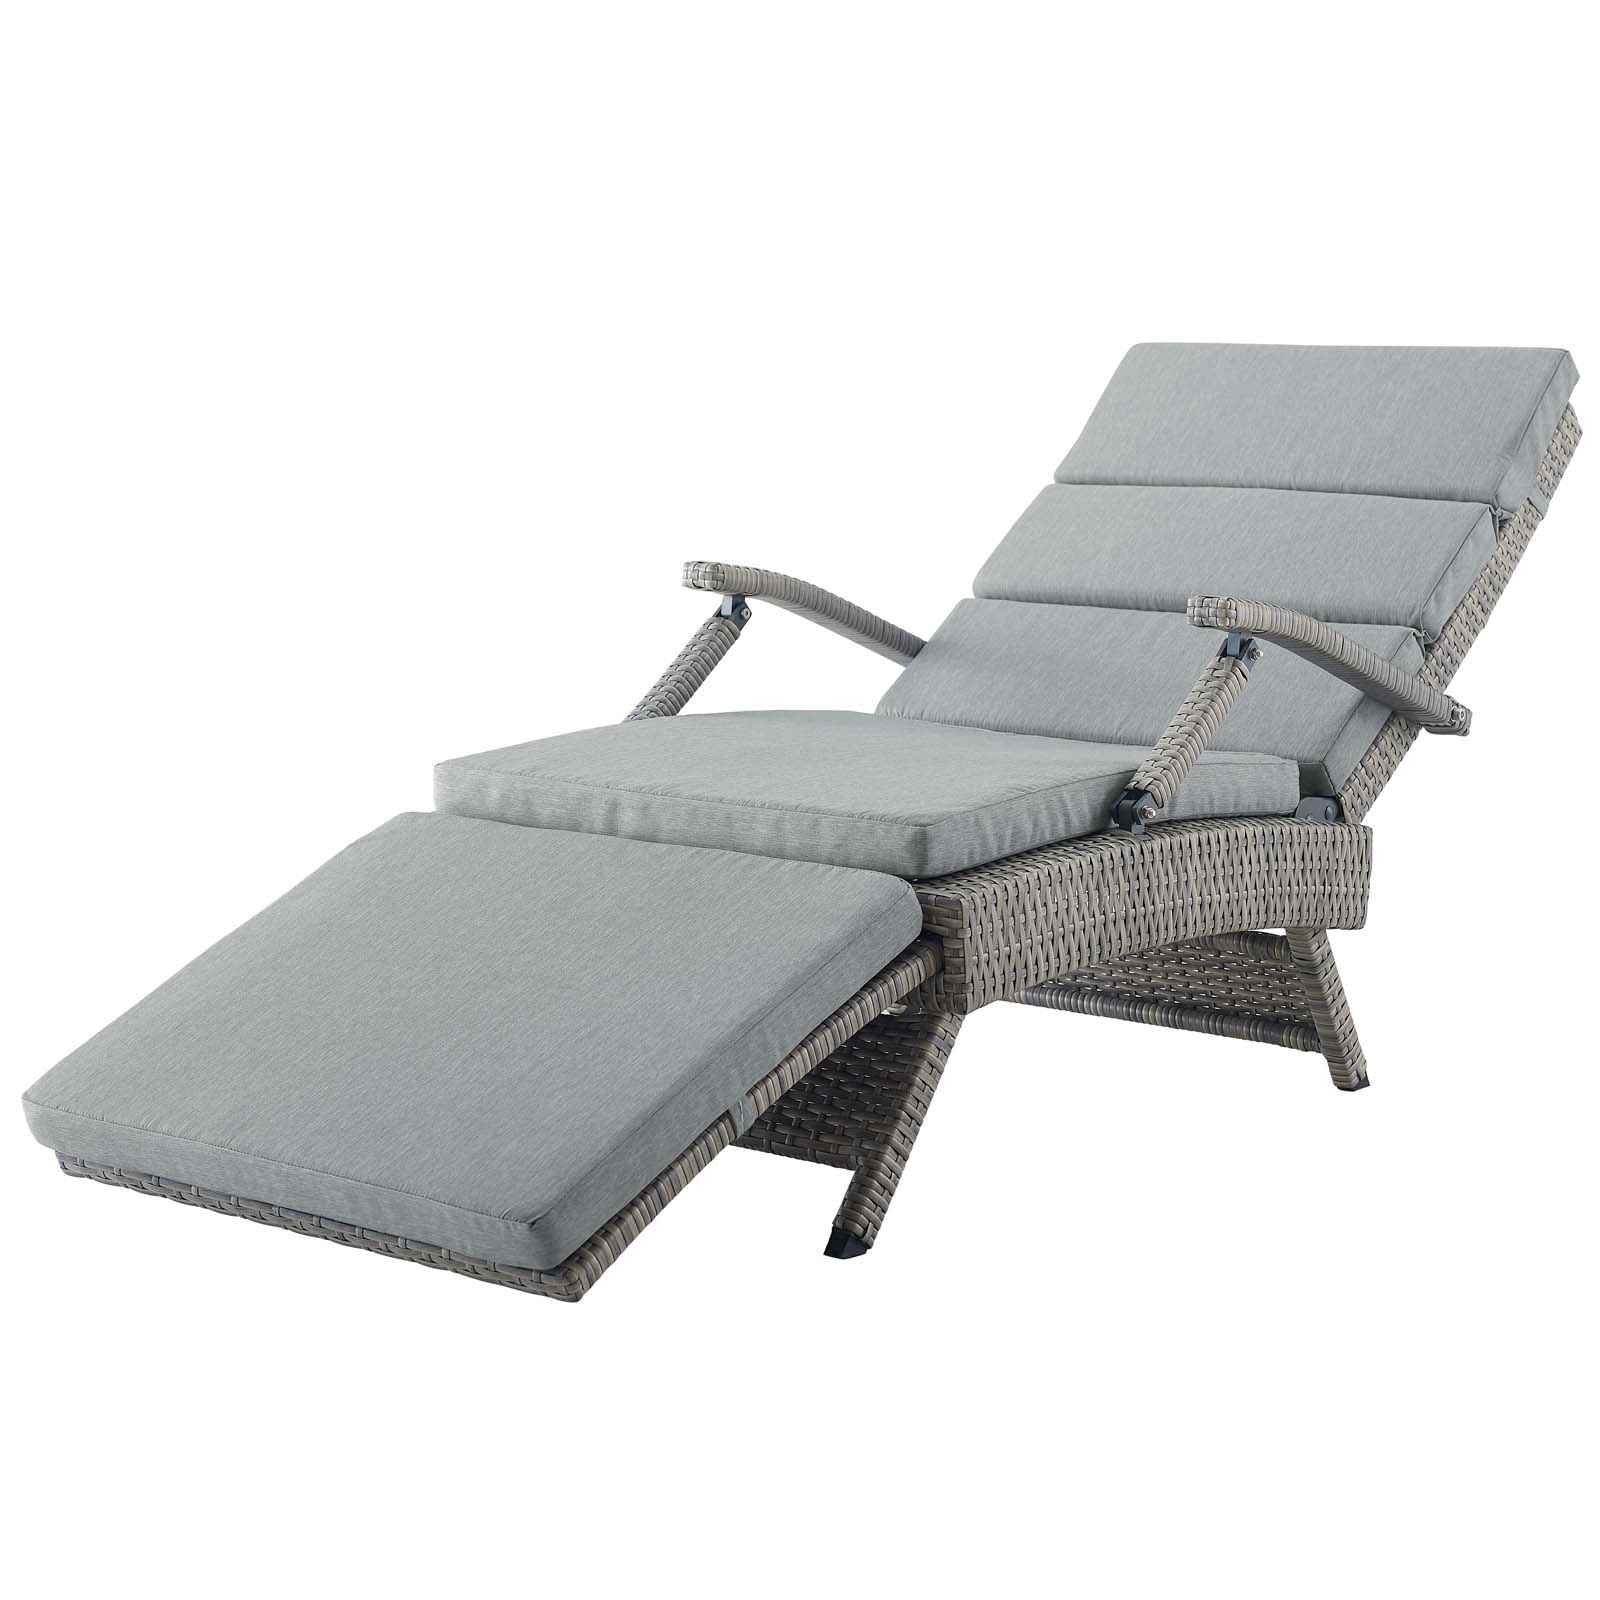 Modern Contemporary Urban Design Outdoor Patio Balcony Garden Furniture Lounge Chair Chaise, Rattan Wicker, Grey Gray - image 1 of 8